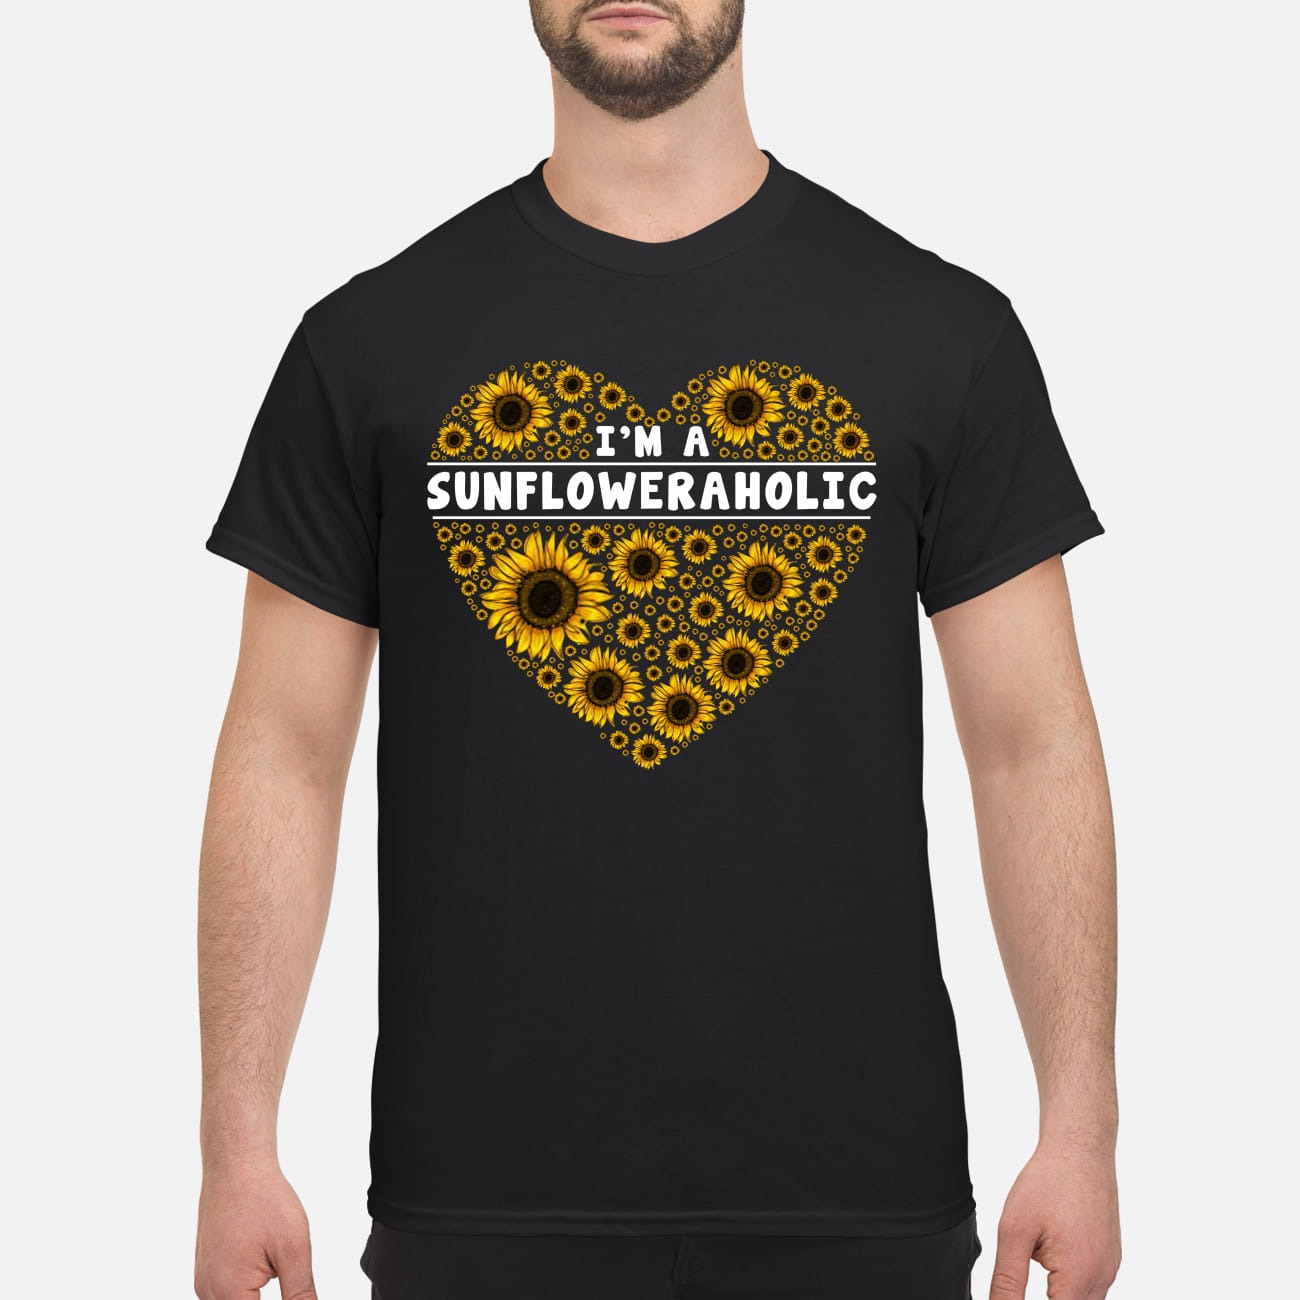 I'm a sunfloweraholic classic shirt